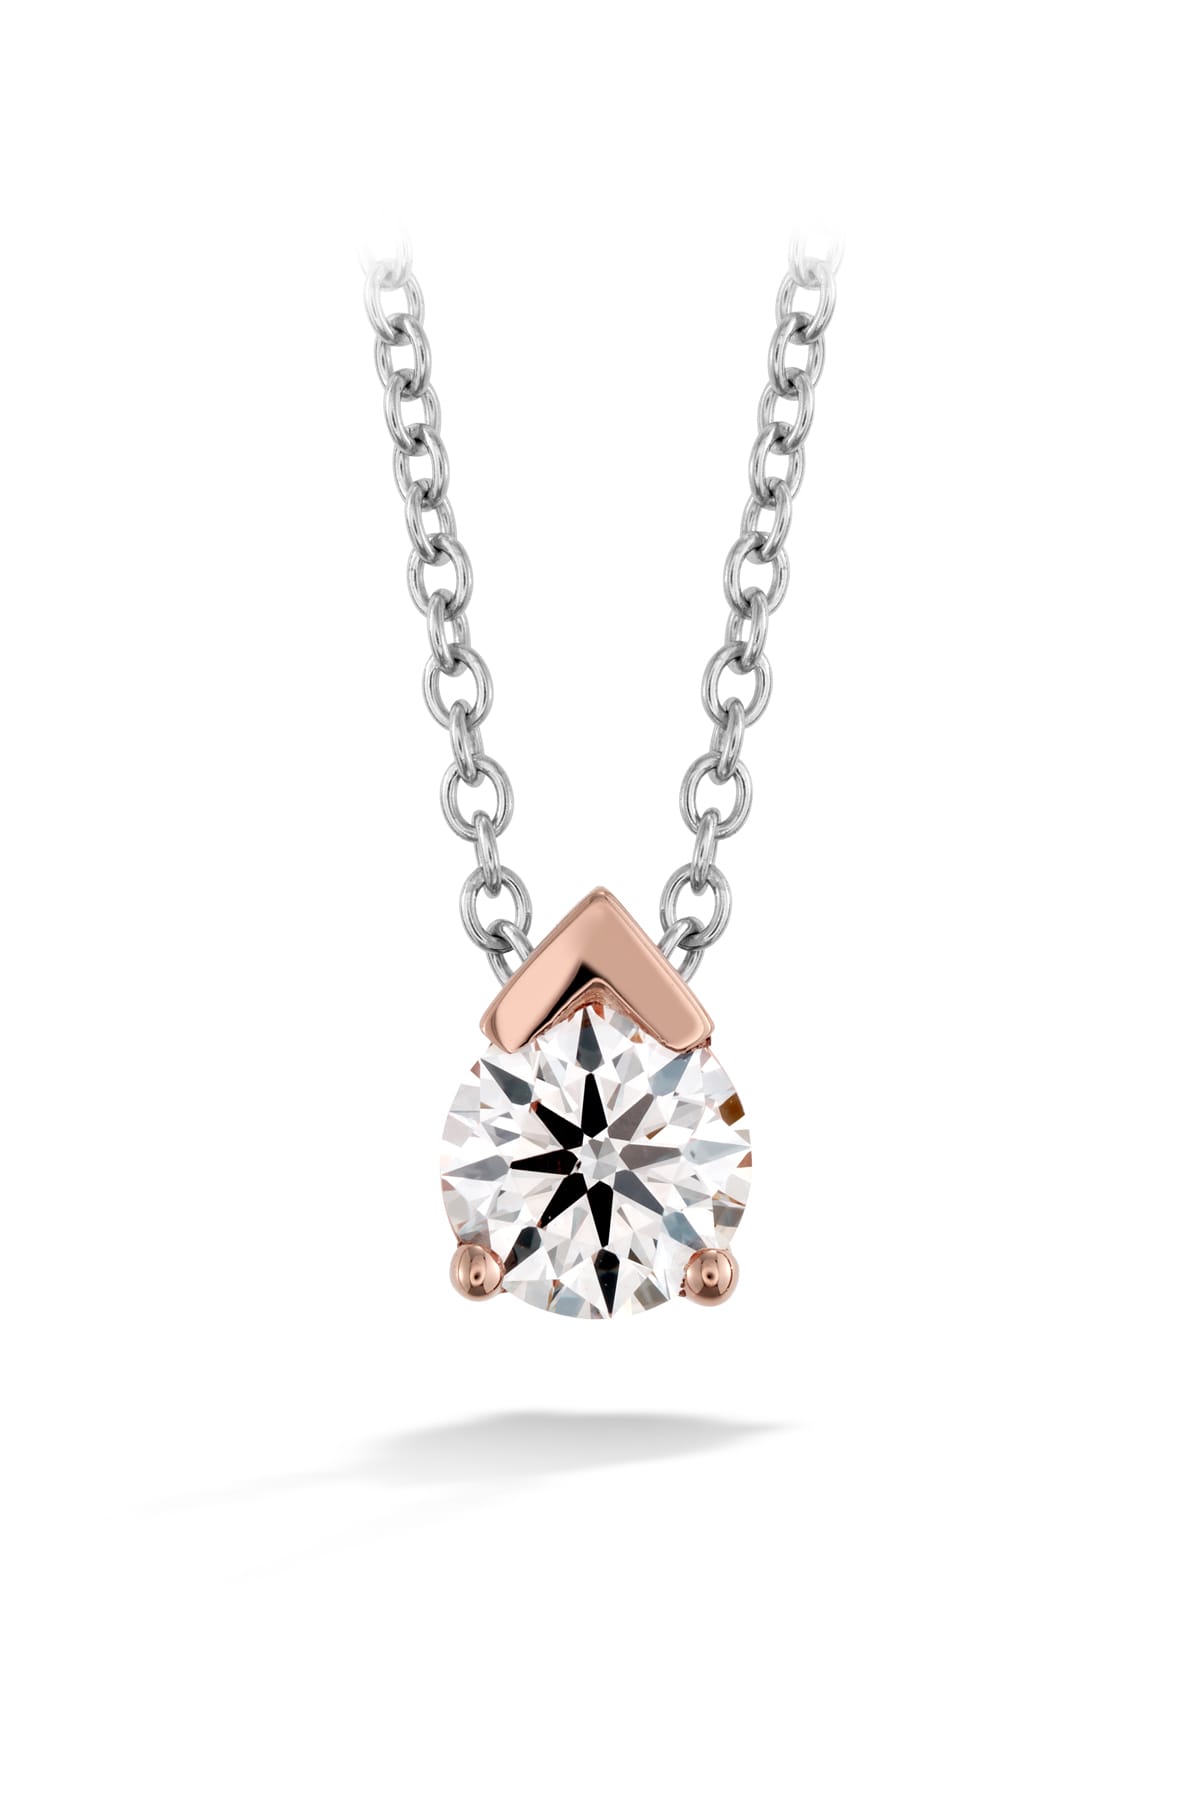 Aerial Single Diamond Pendant From Hearts On Fire available at LeGassick Diamonds and Jewellery Gold Coast, Australia.